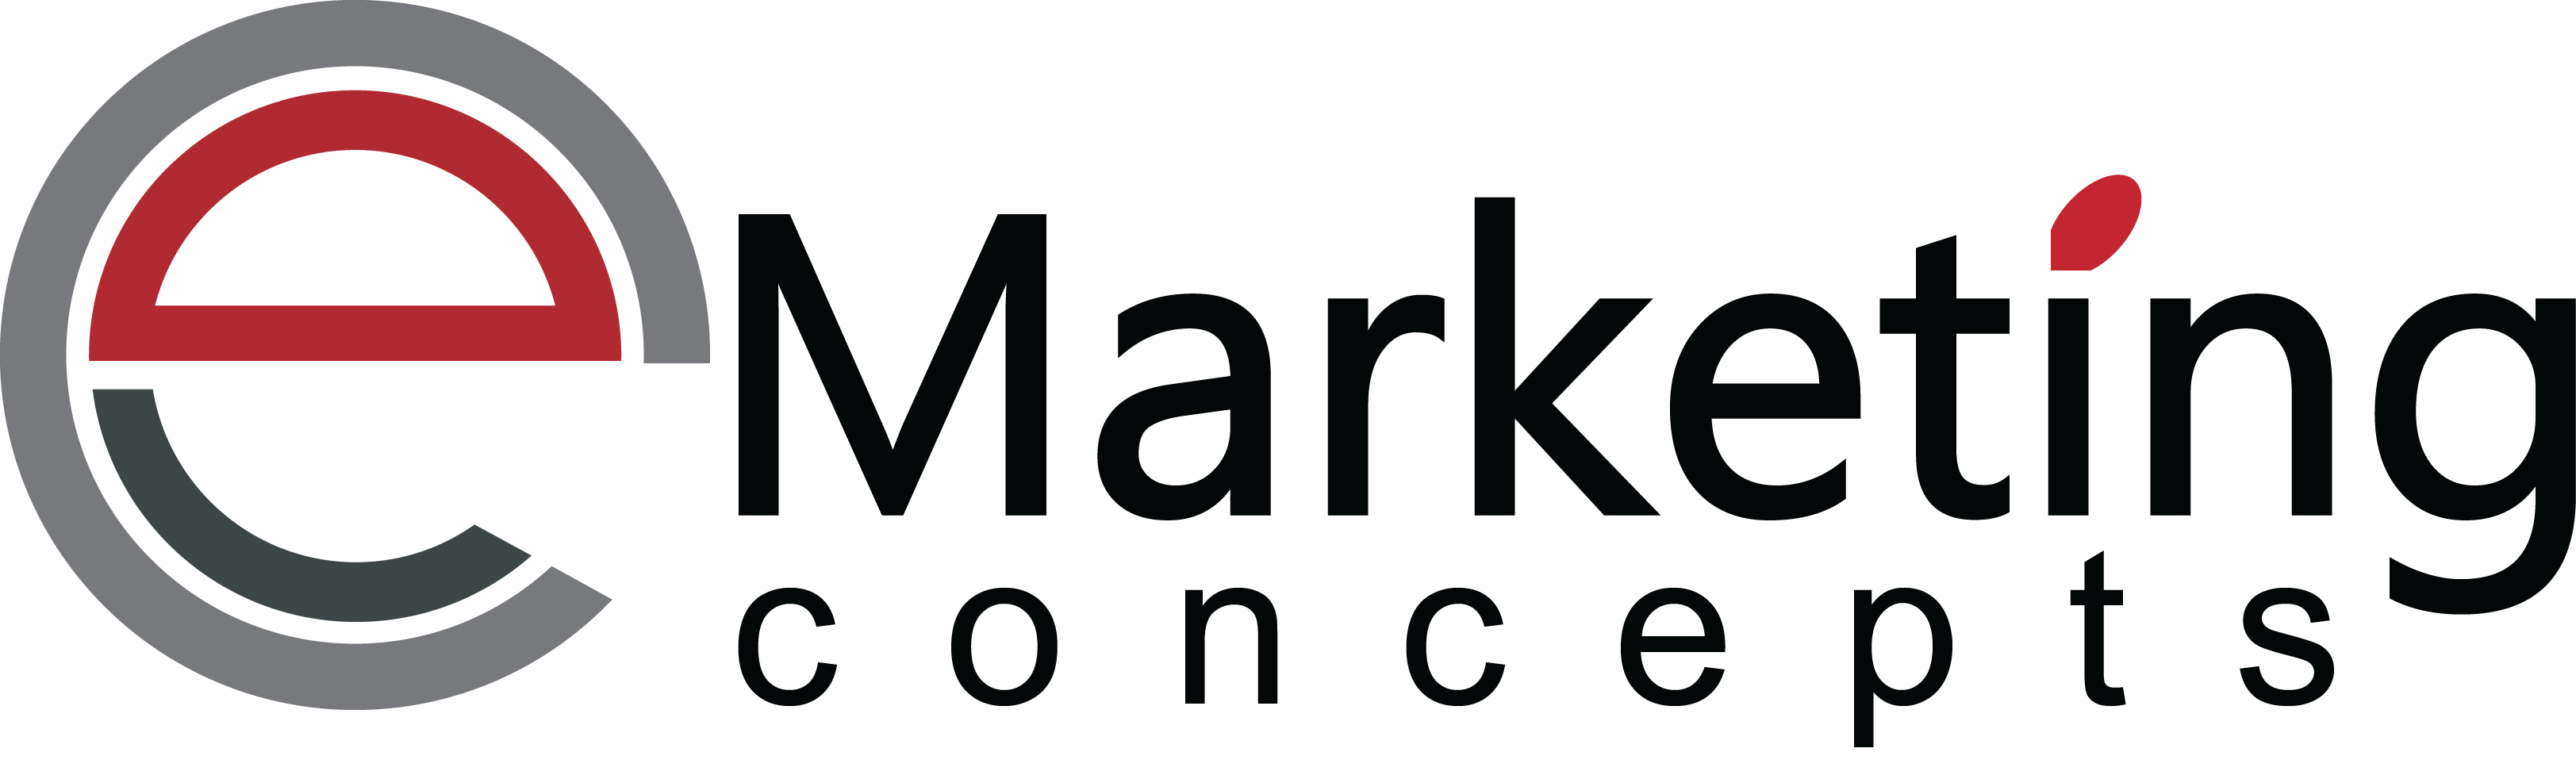 eMarketing Concepts Logo